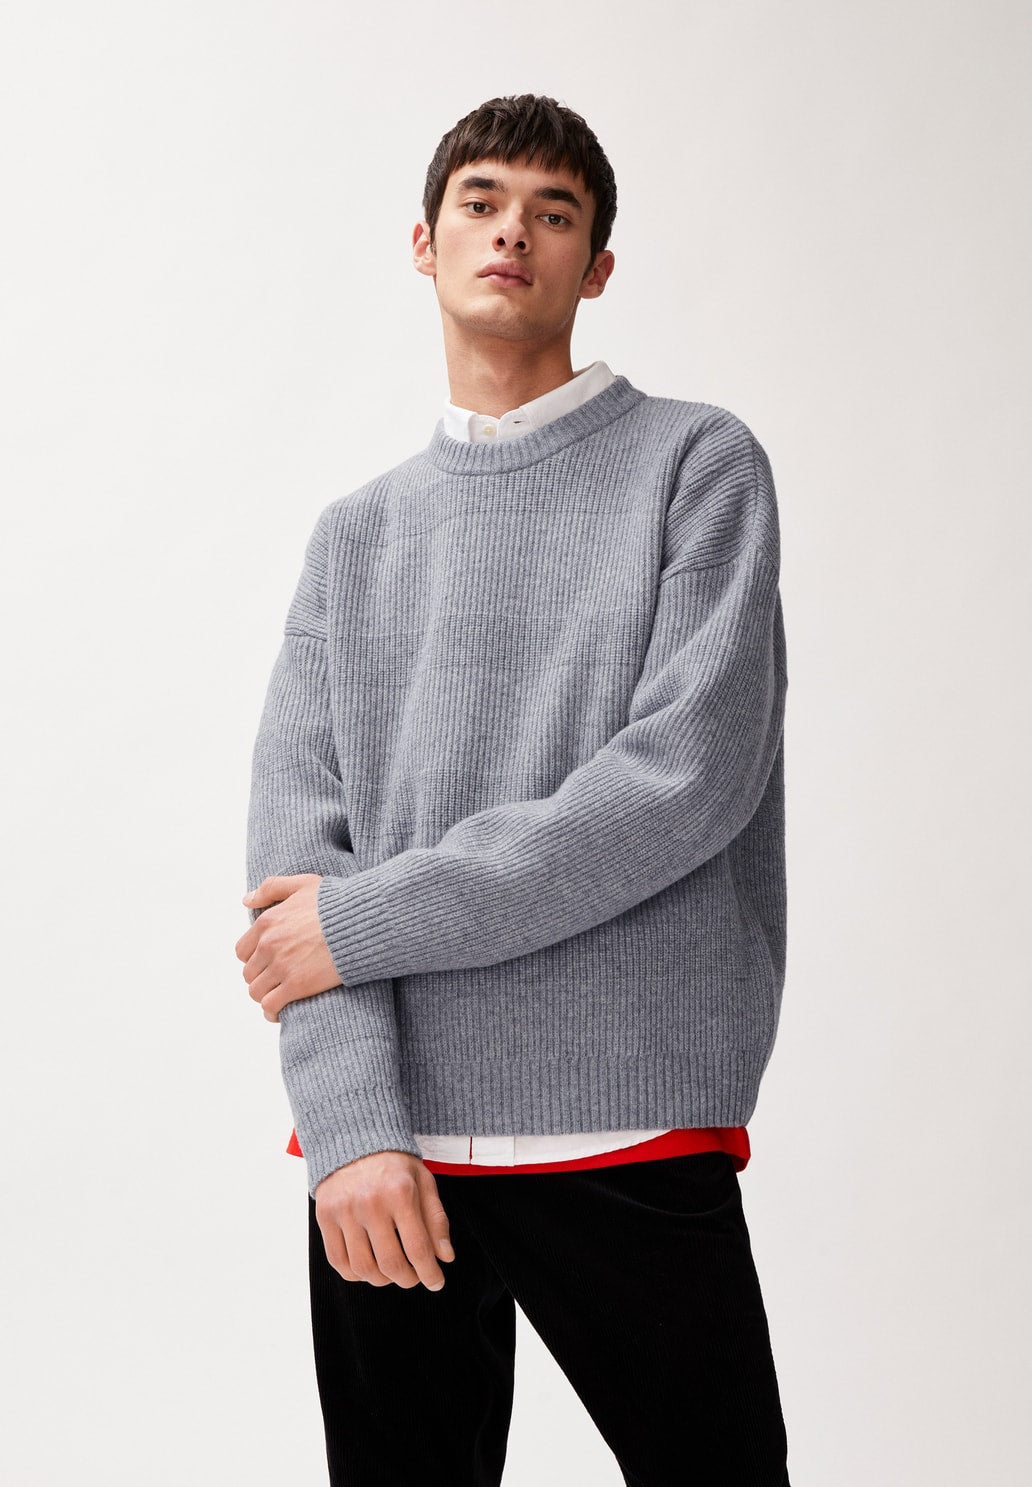 VISKAANO – Pullover aus Bio-Woll Mix in light grey melange